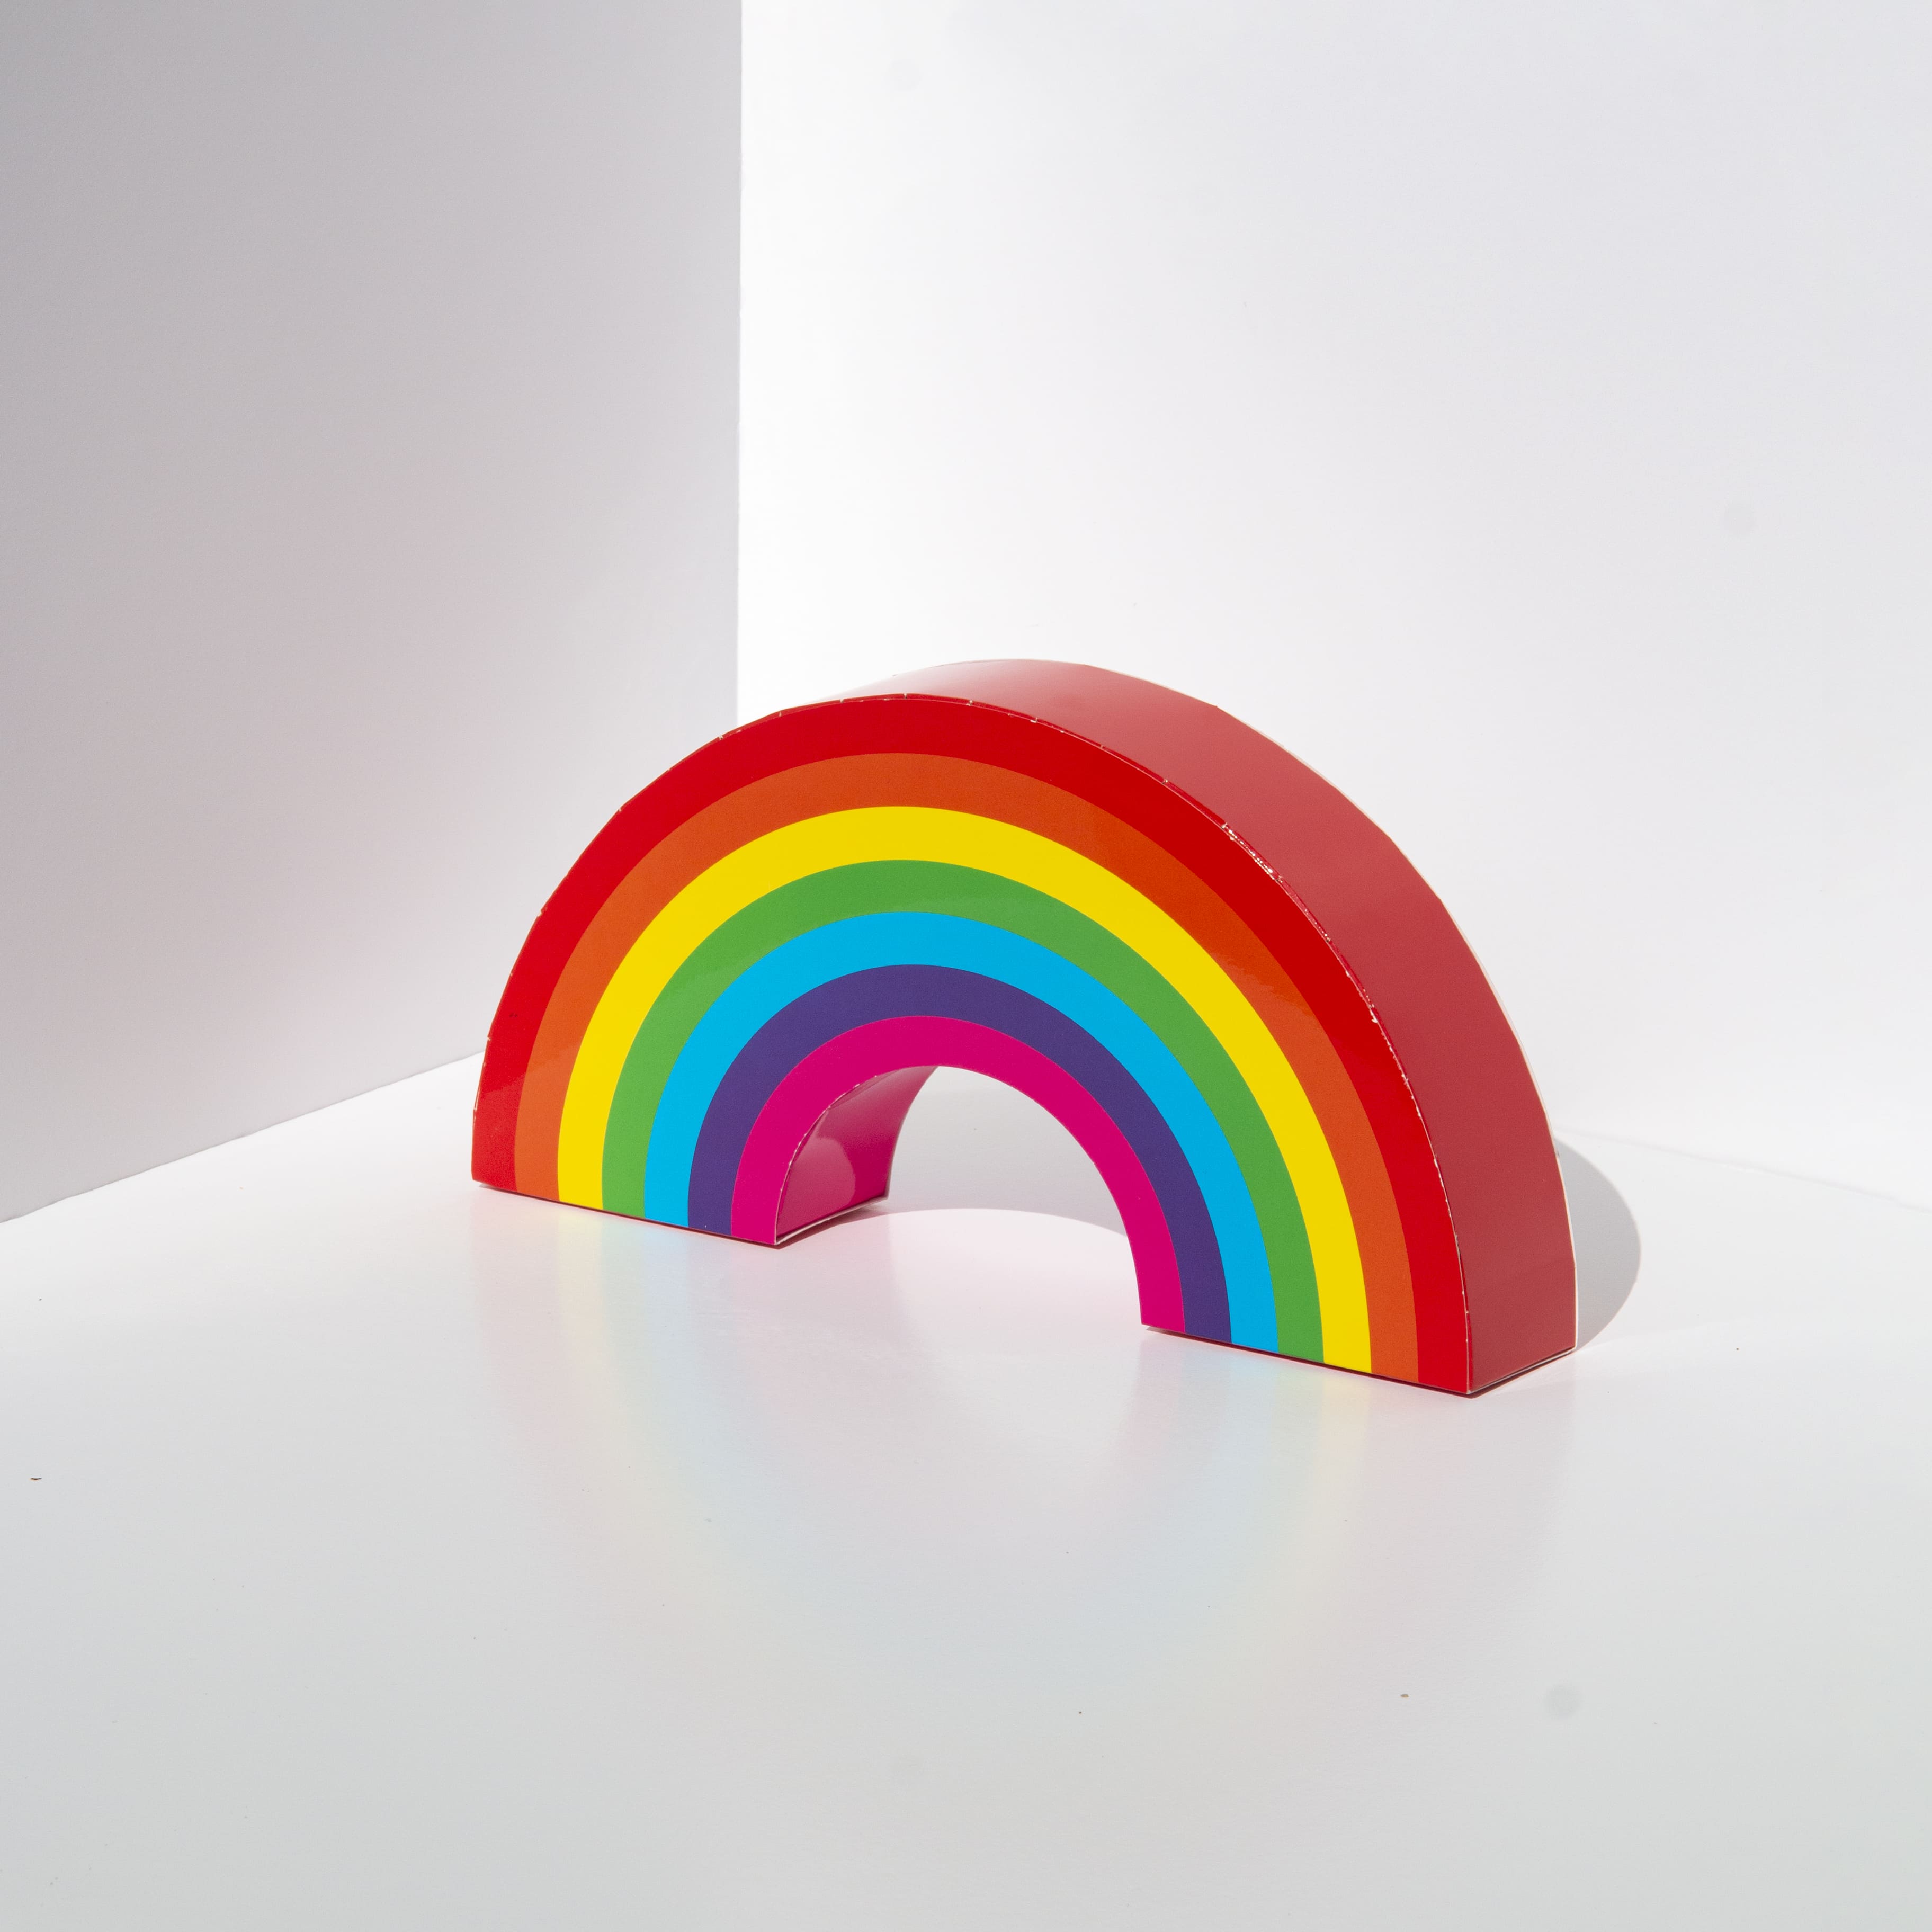 Rainbow | Iconos recortables